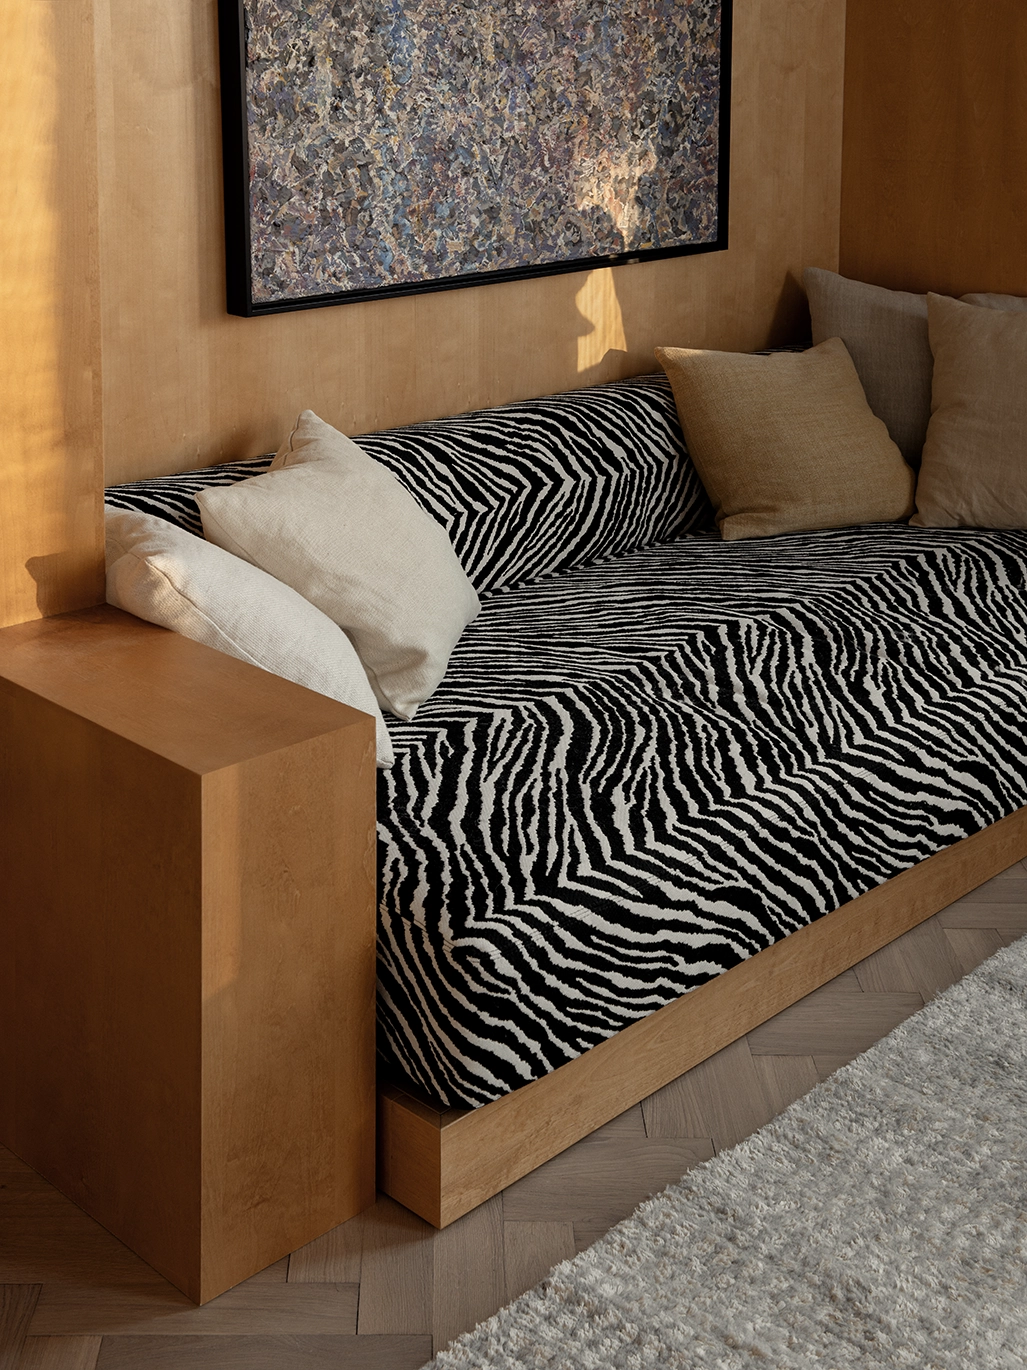 inbyggd soffa i trä med zebratyg